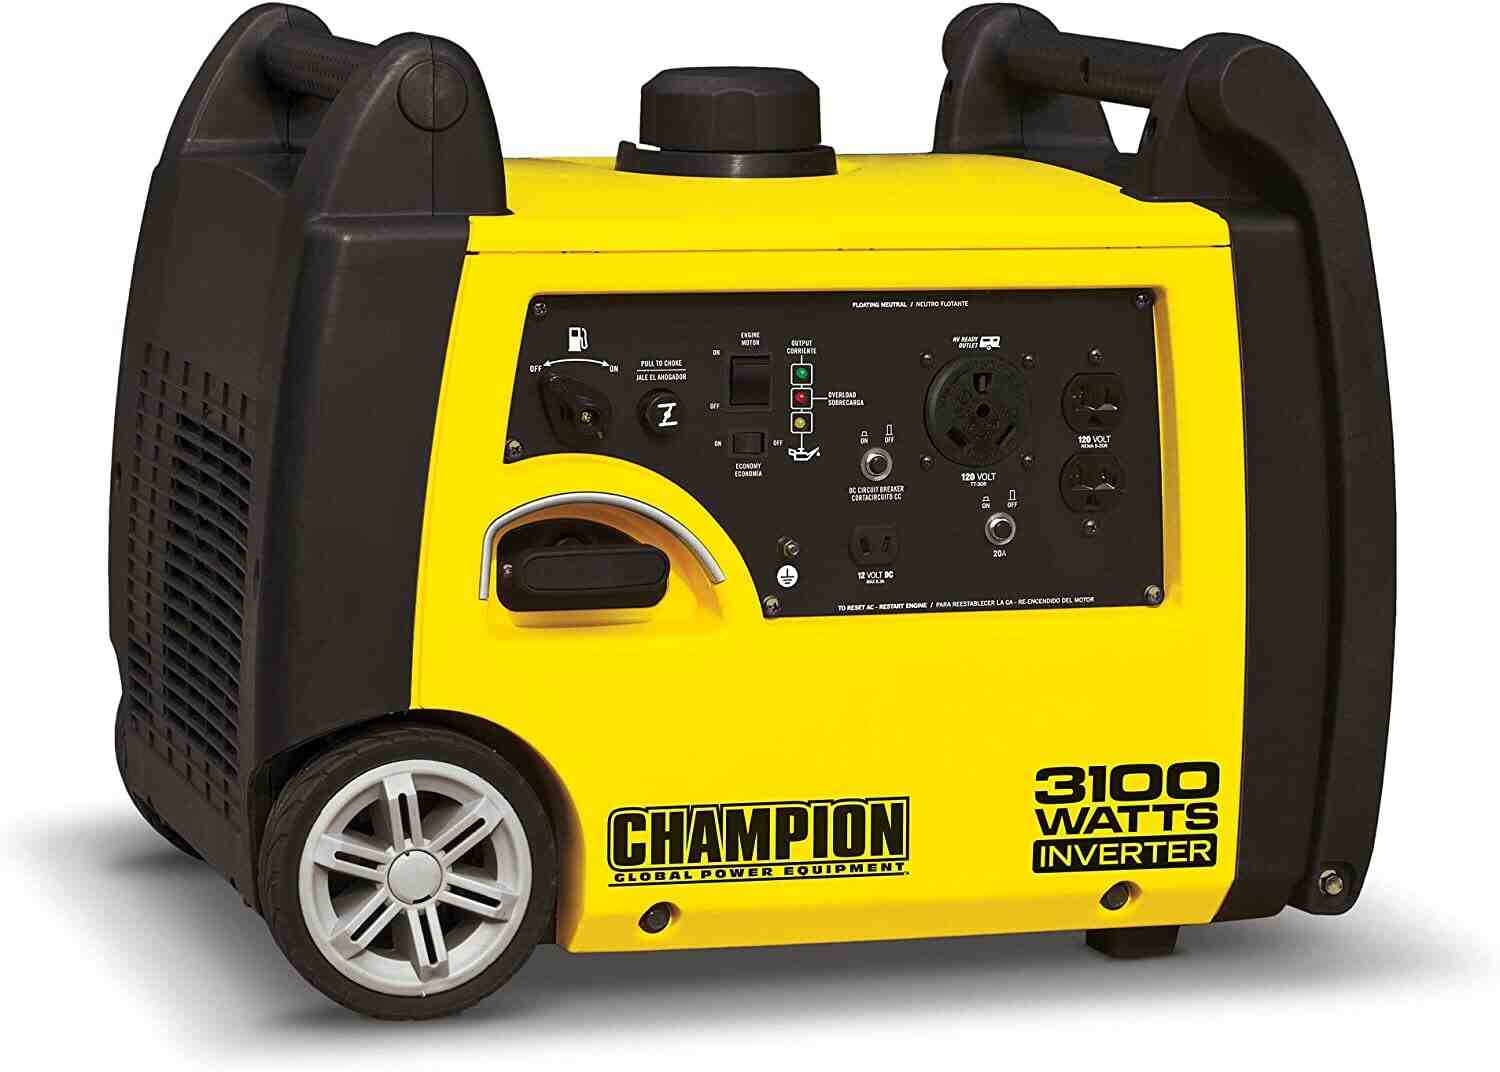 Champions 3100 watt RV ready Portable Generator